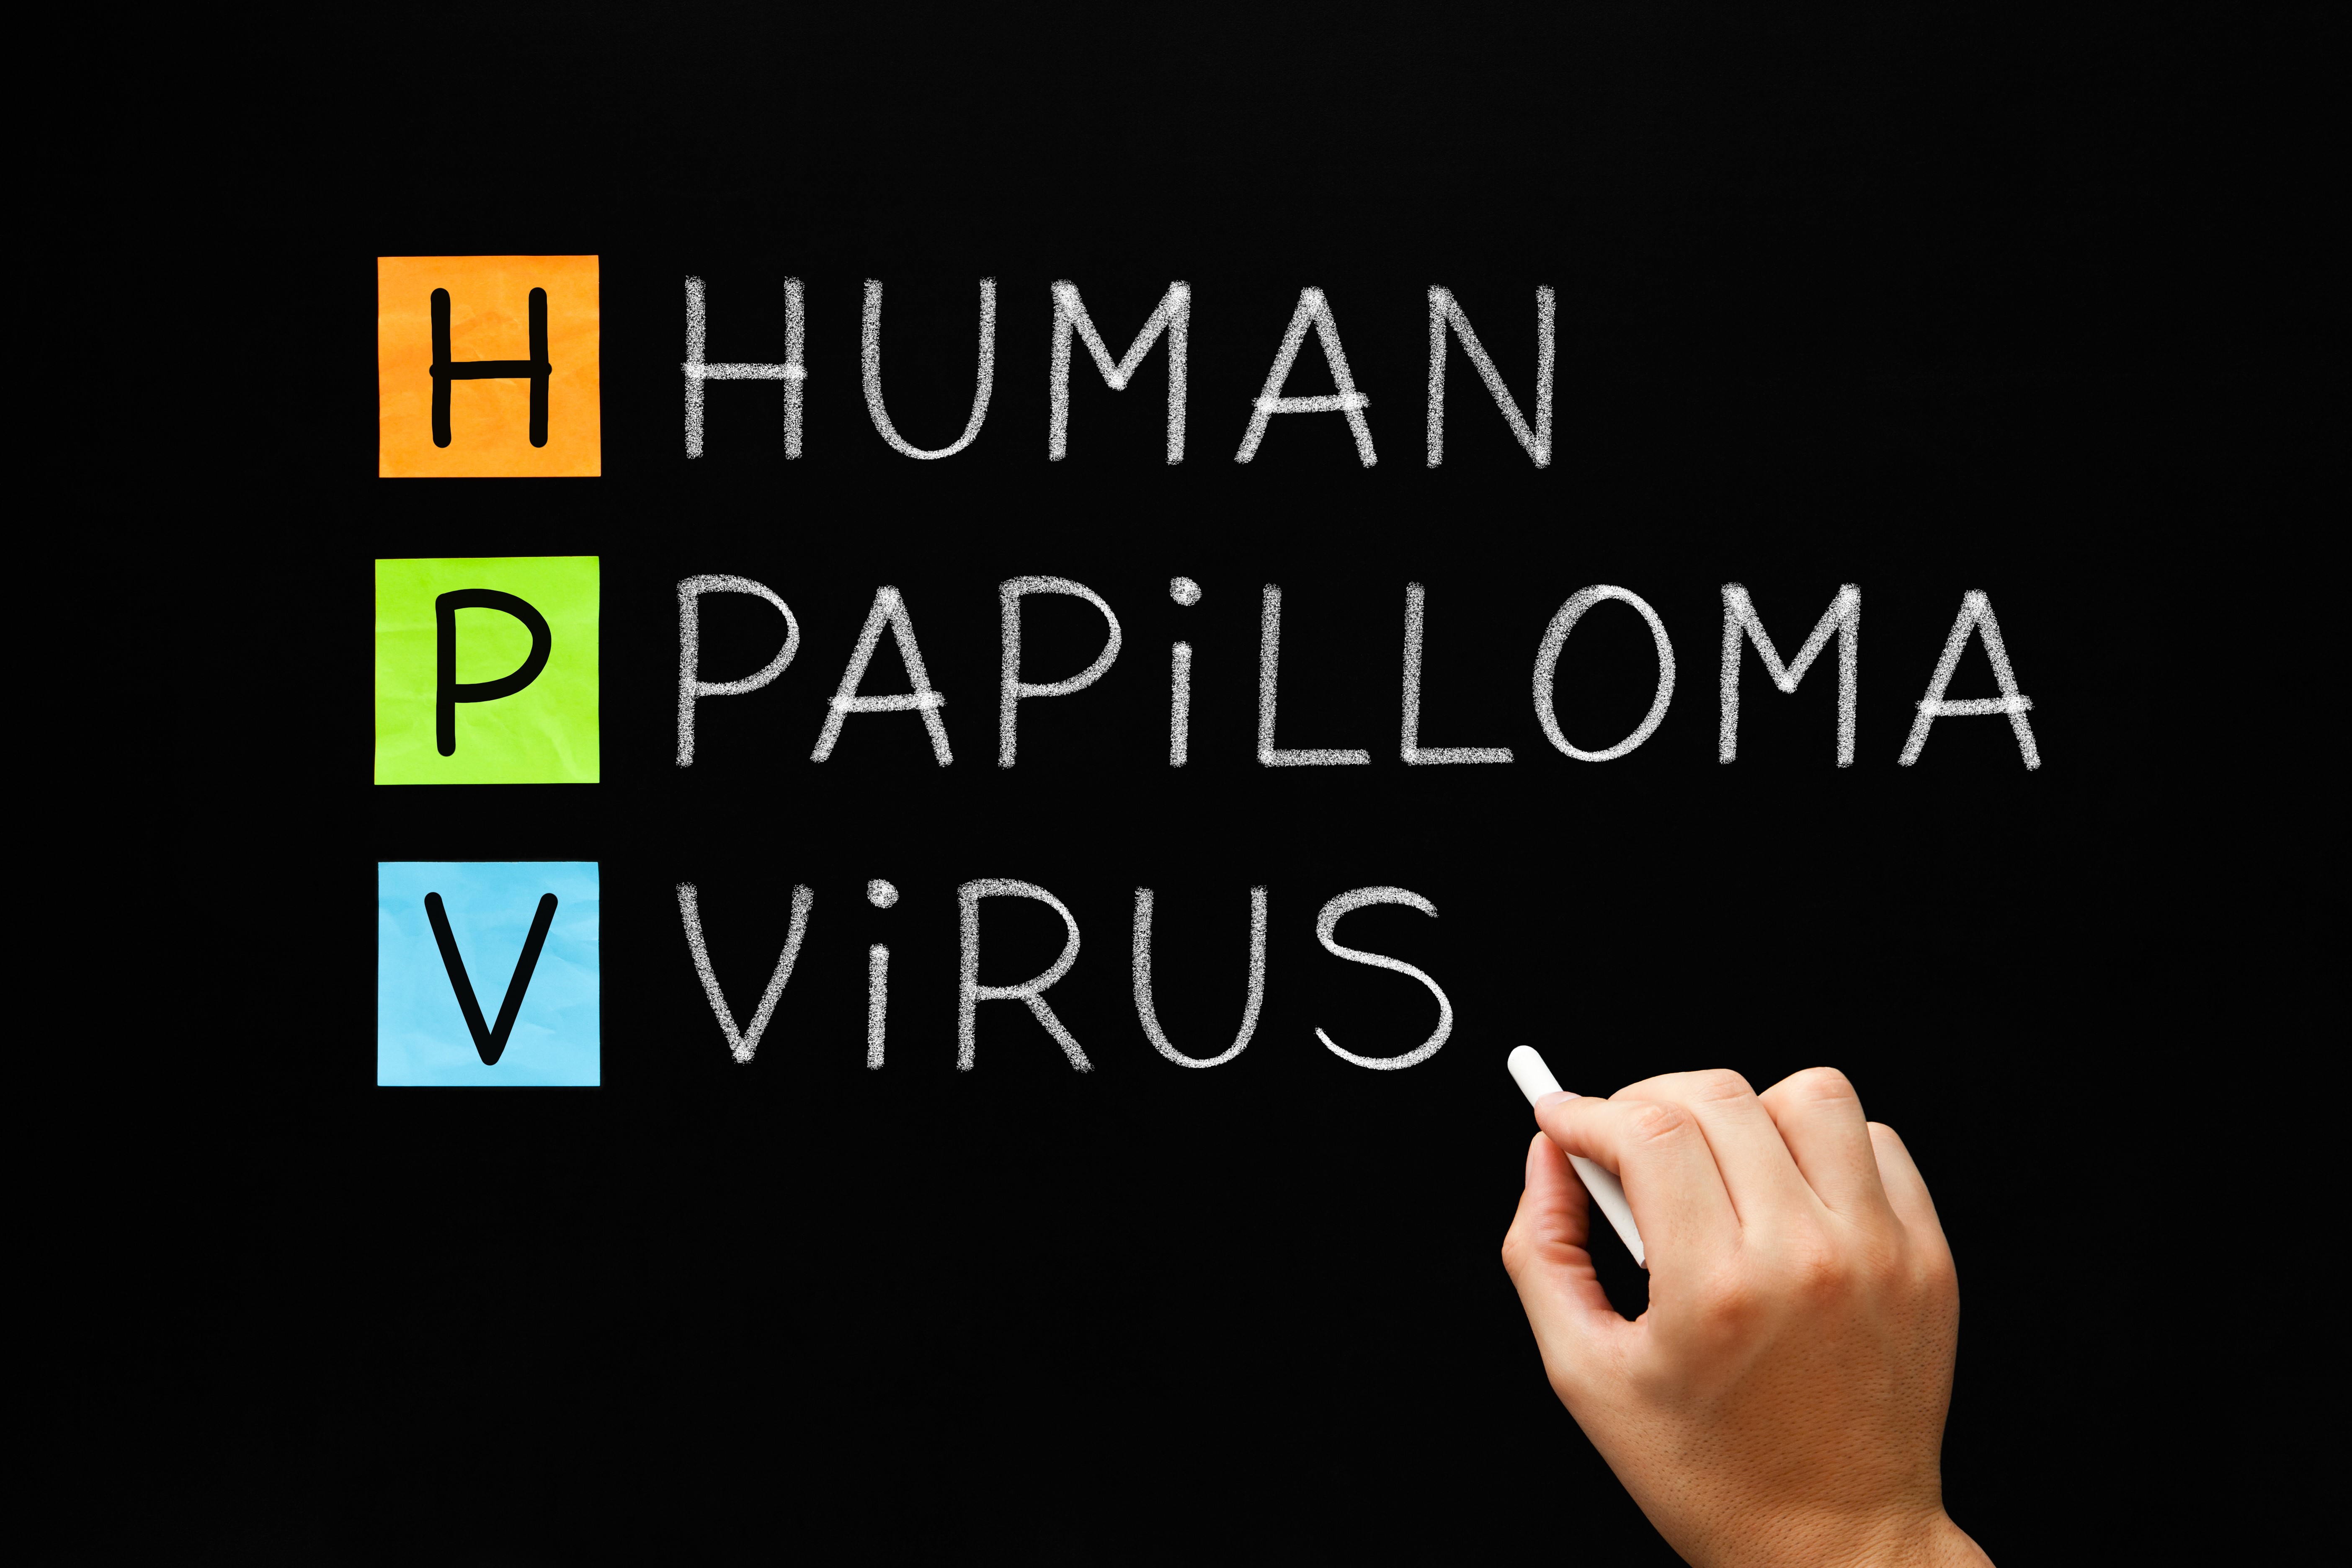 Hand writing HPV - Human Papilloma Virus with white chalk on blackboard.